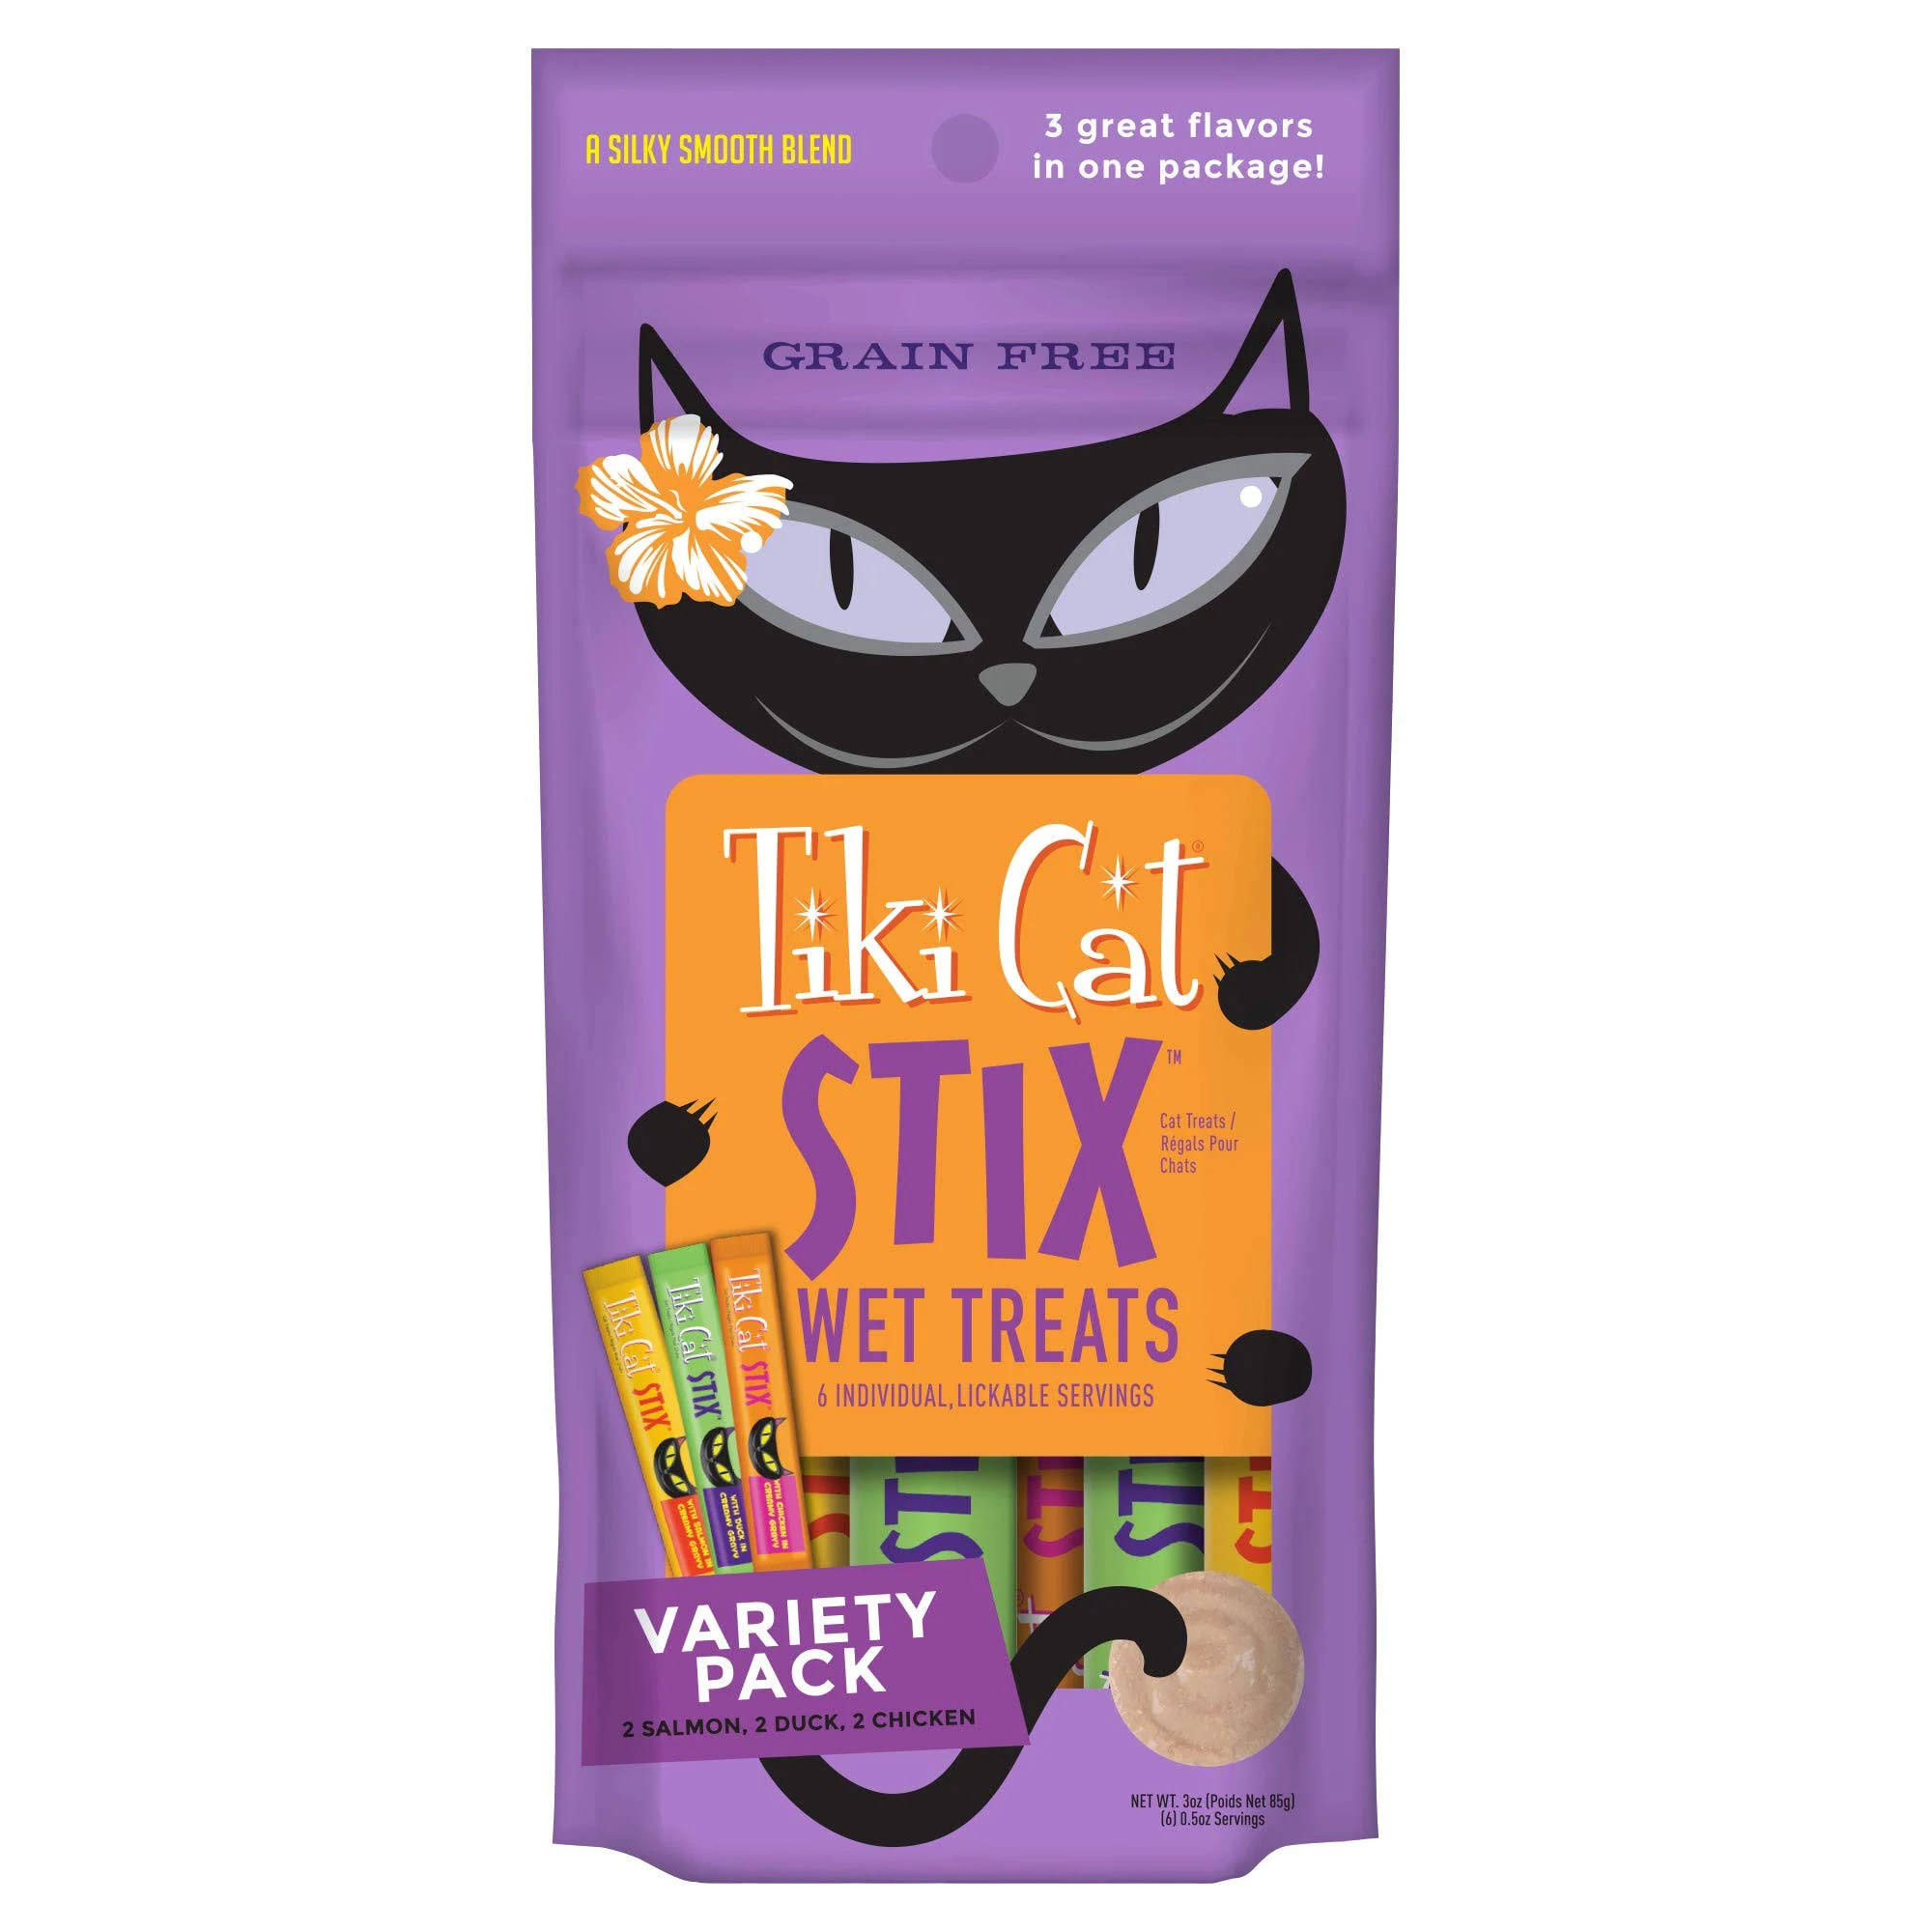 Tiki Cat Stix, Wet Treats - Variety Pack, Grain Free Size: 6 Count | PetSmart